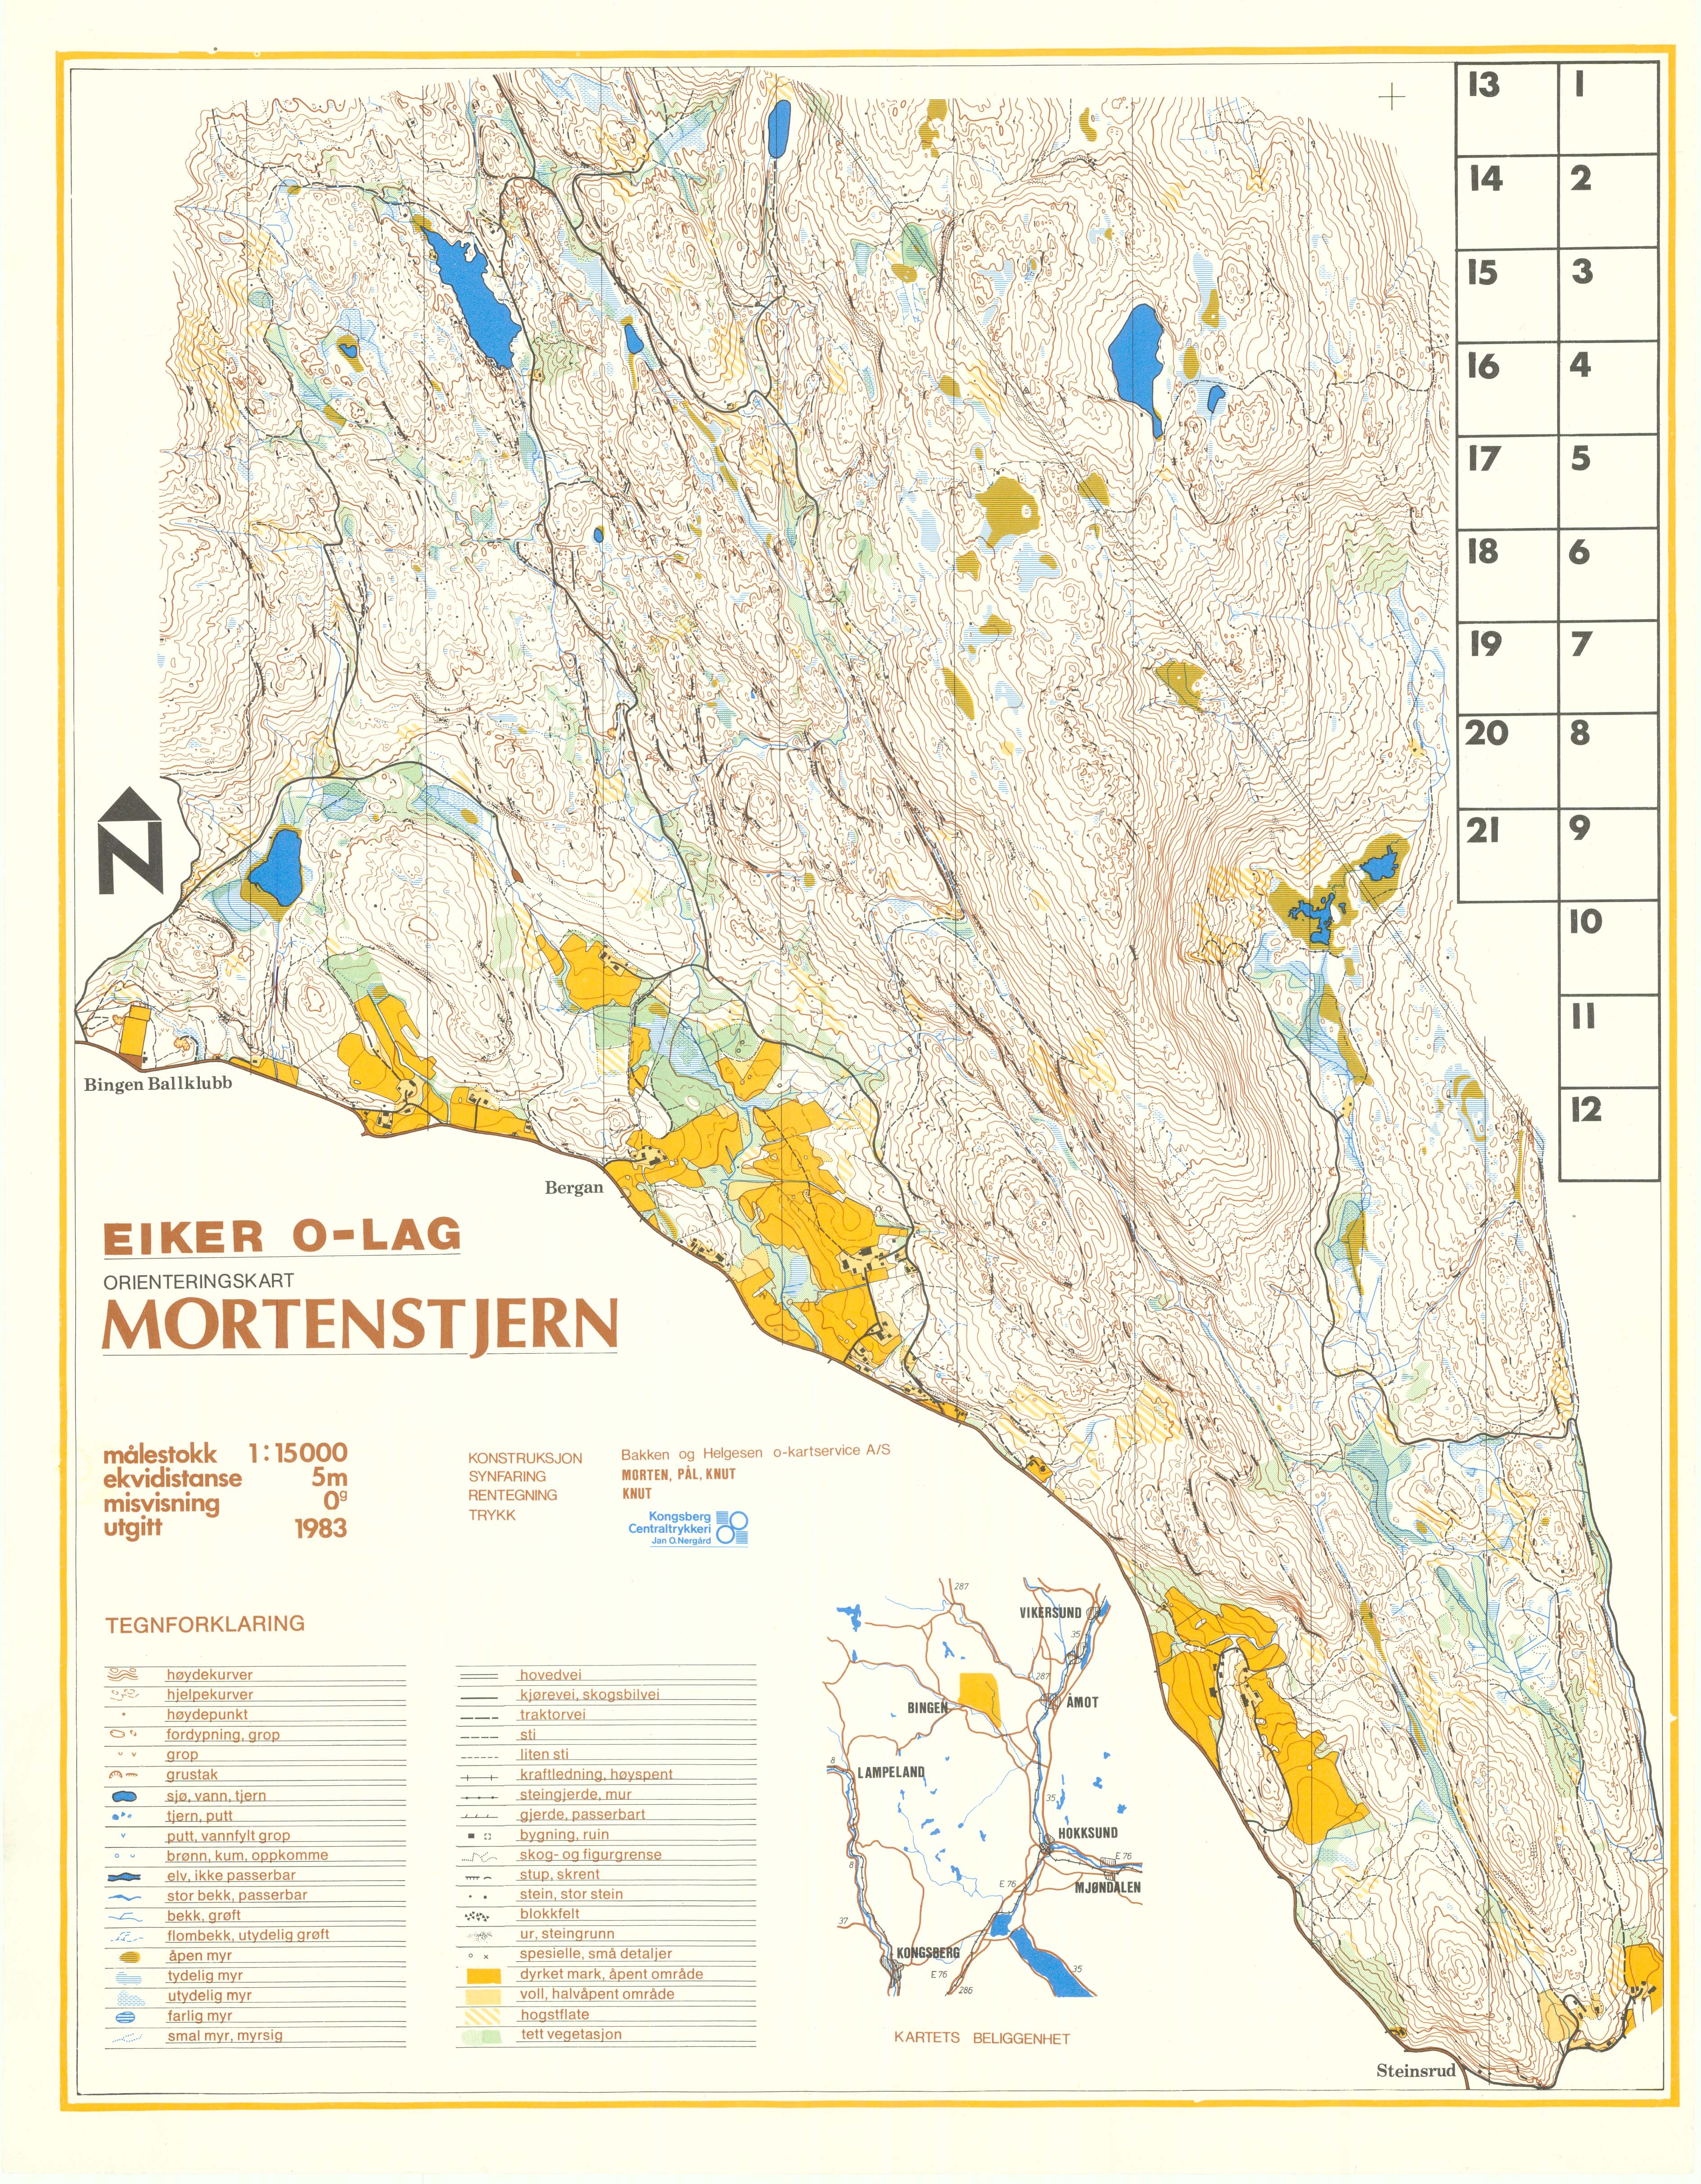 Mortenstjern (1983-01-01)